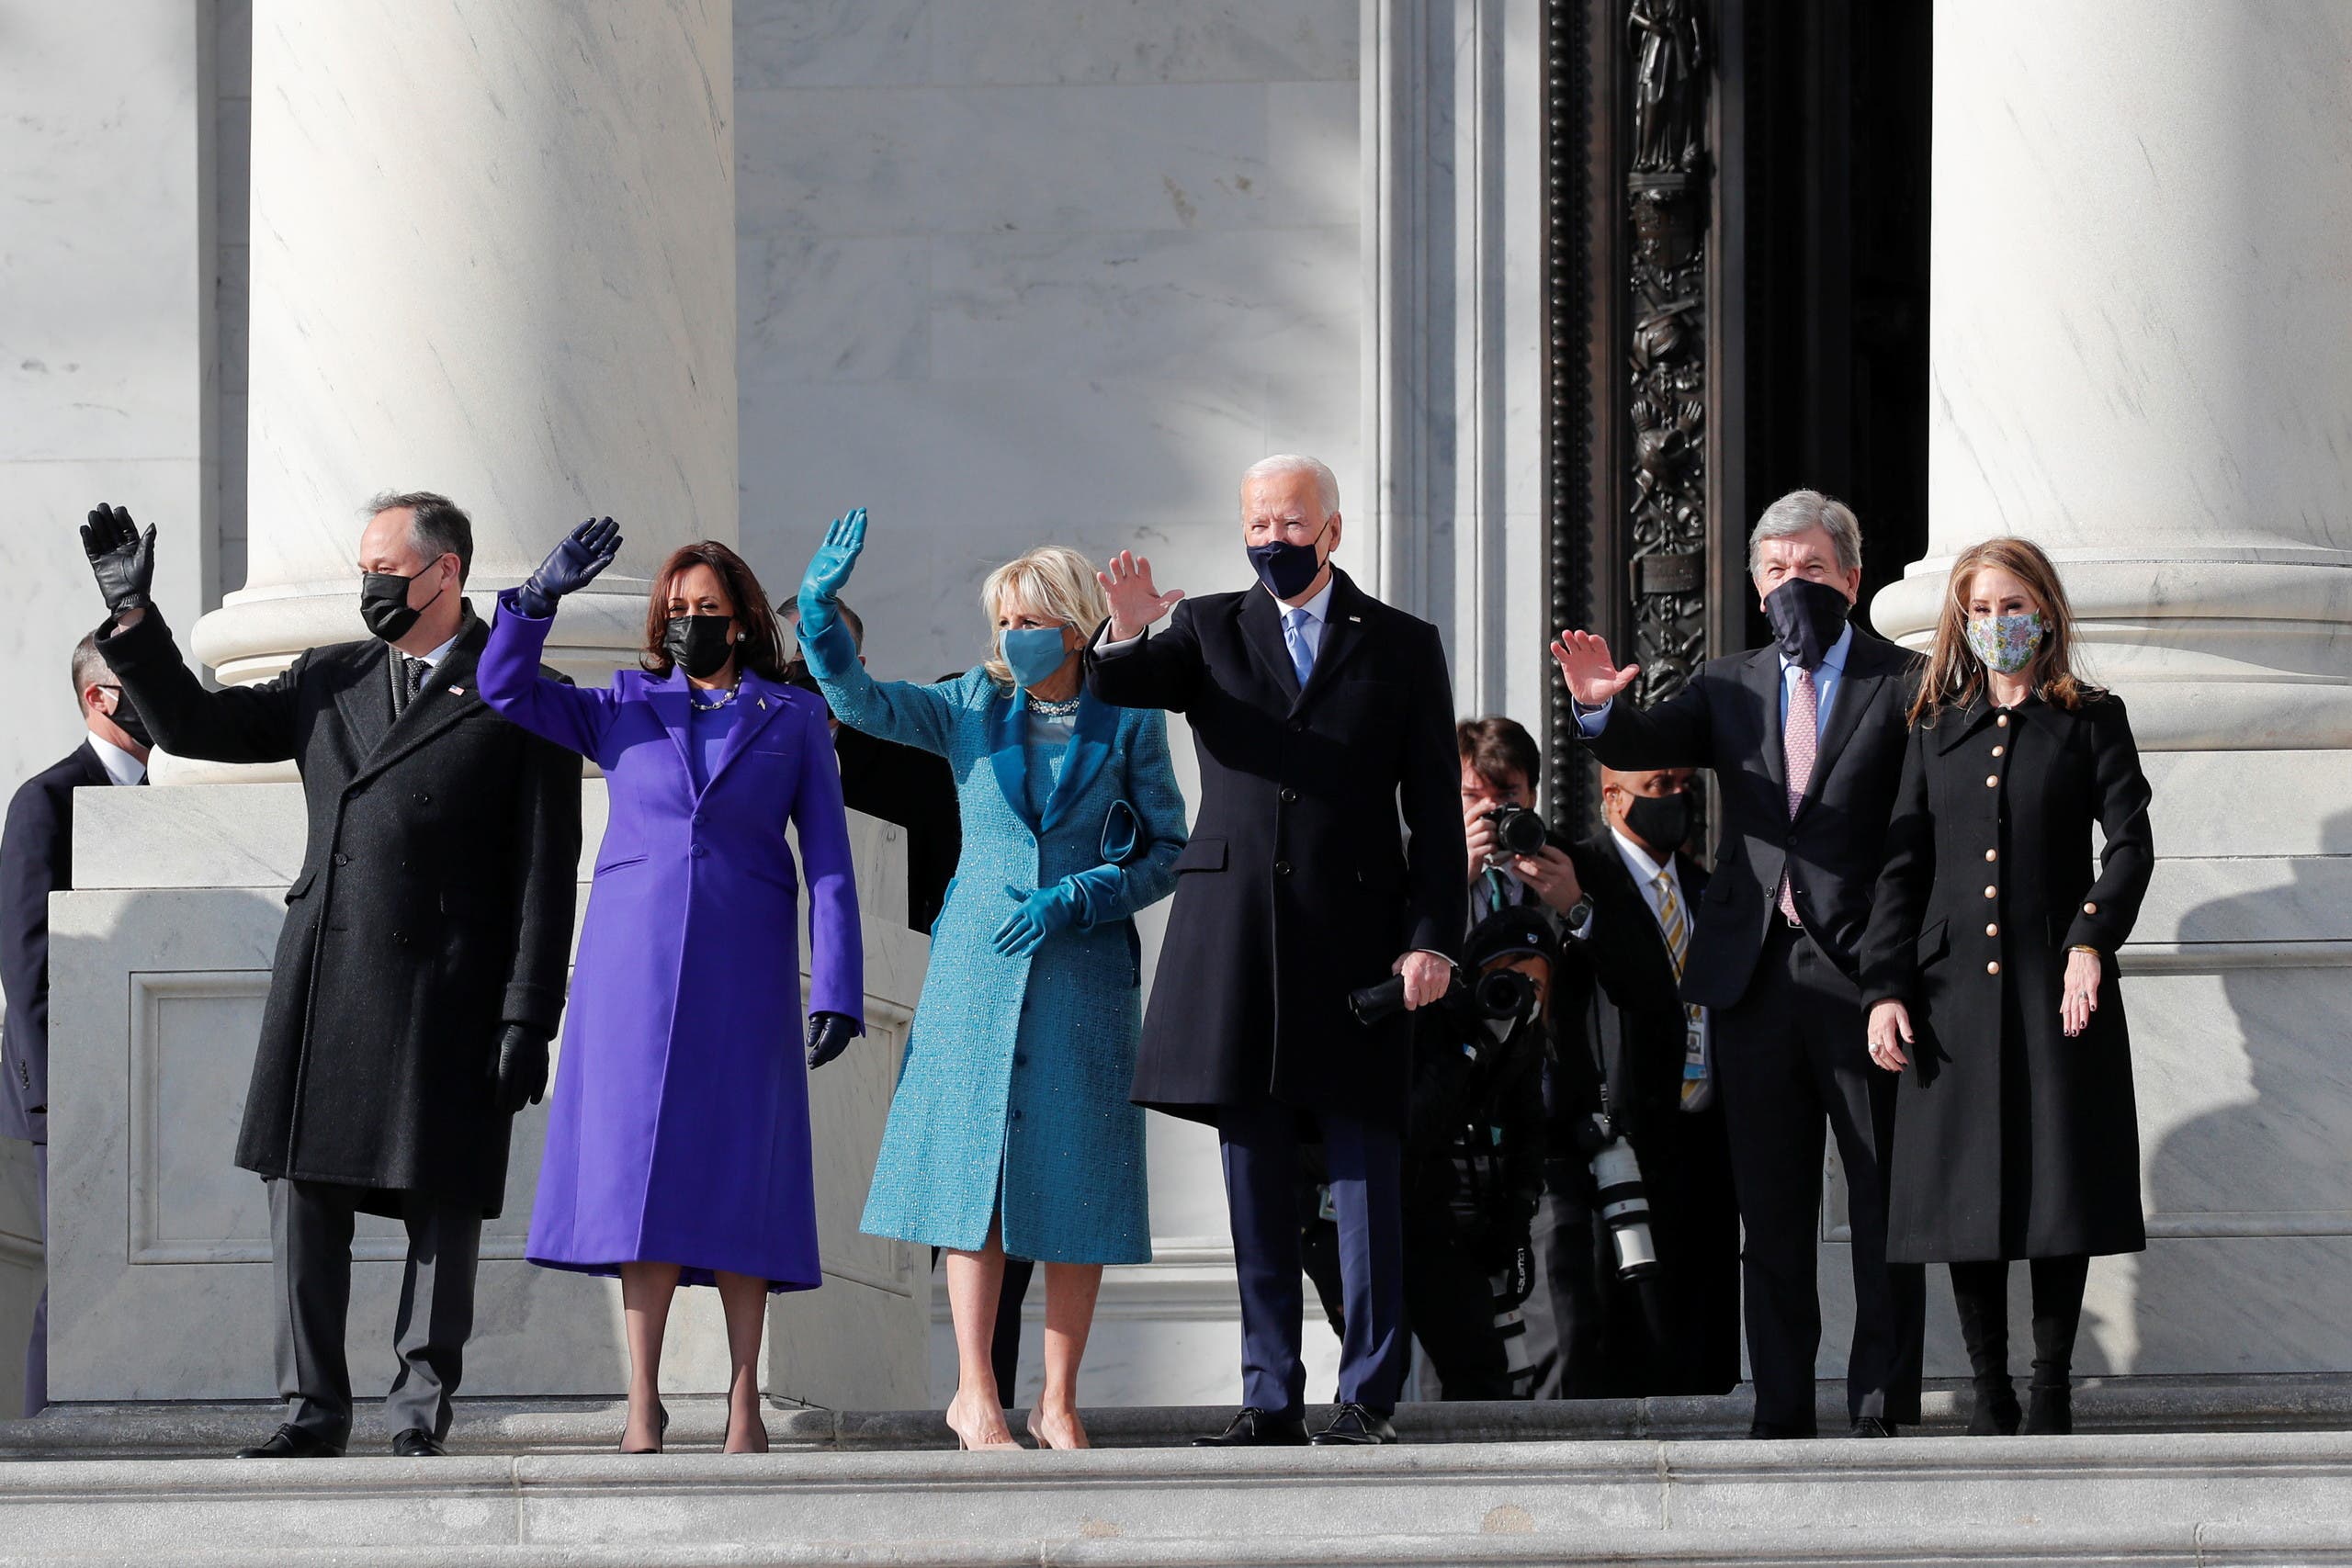 President Joe Biden, wife Jill, Vice President Kamala Harris, and her husband